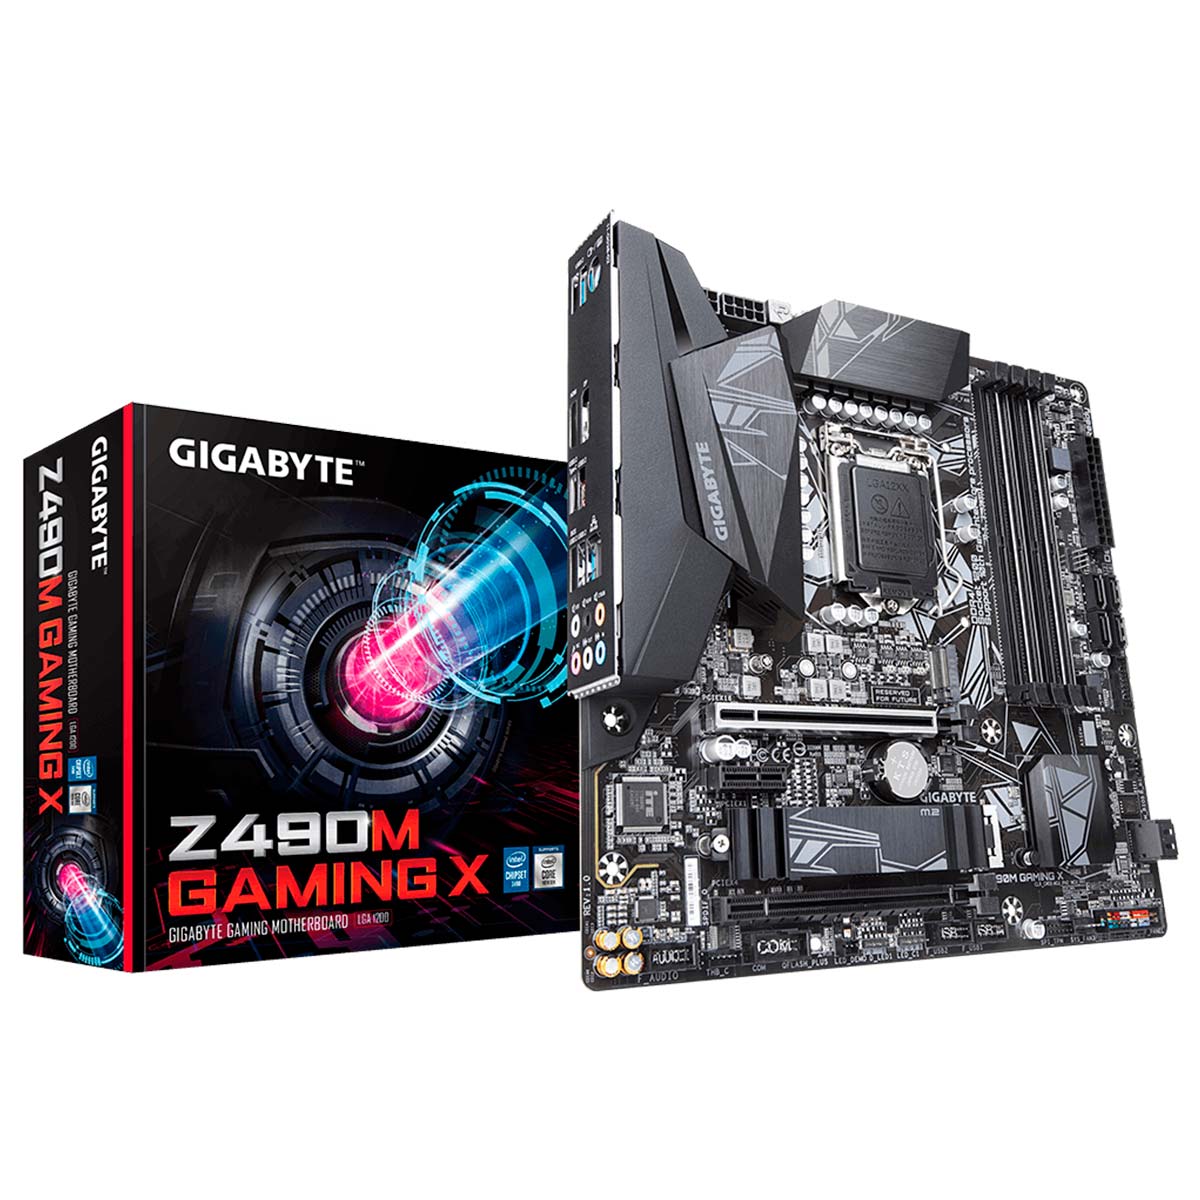 Gigabyte Z490M Gaming X (LGA 1200 - DDR4 4400 O.C) Chipset Intel Z490 Express - USB 3.2 - Slot M.2 - Micro ATX